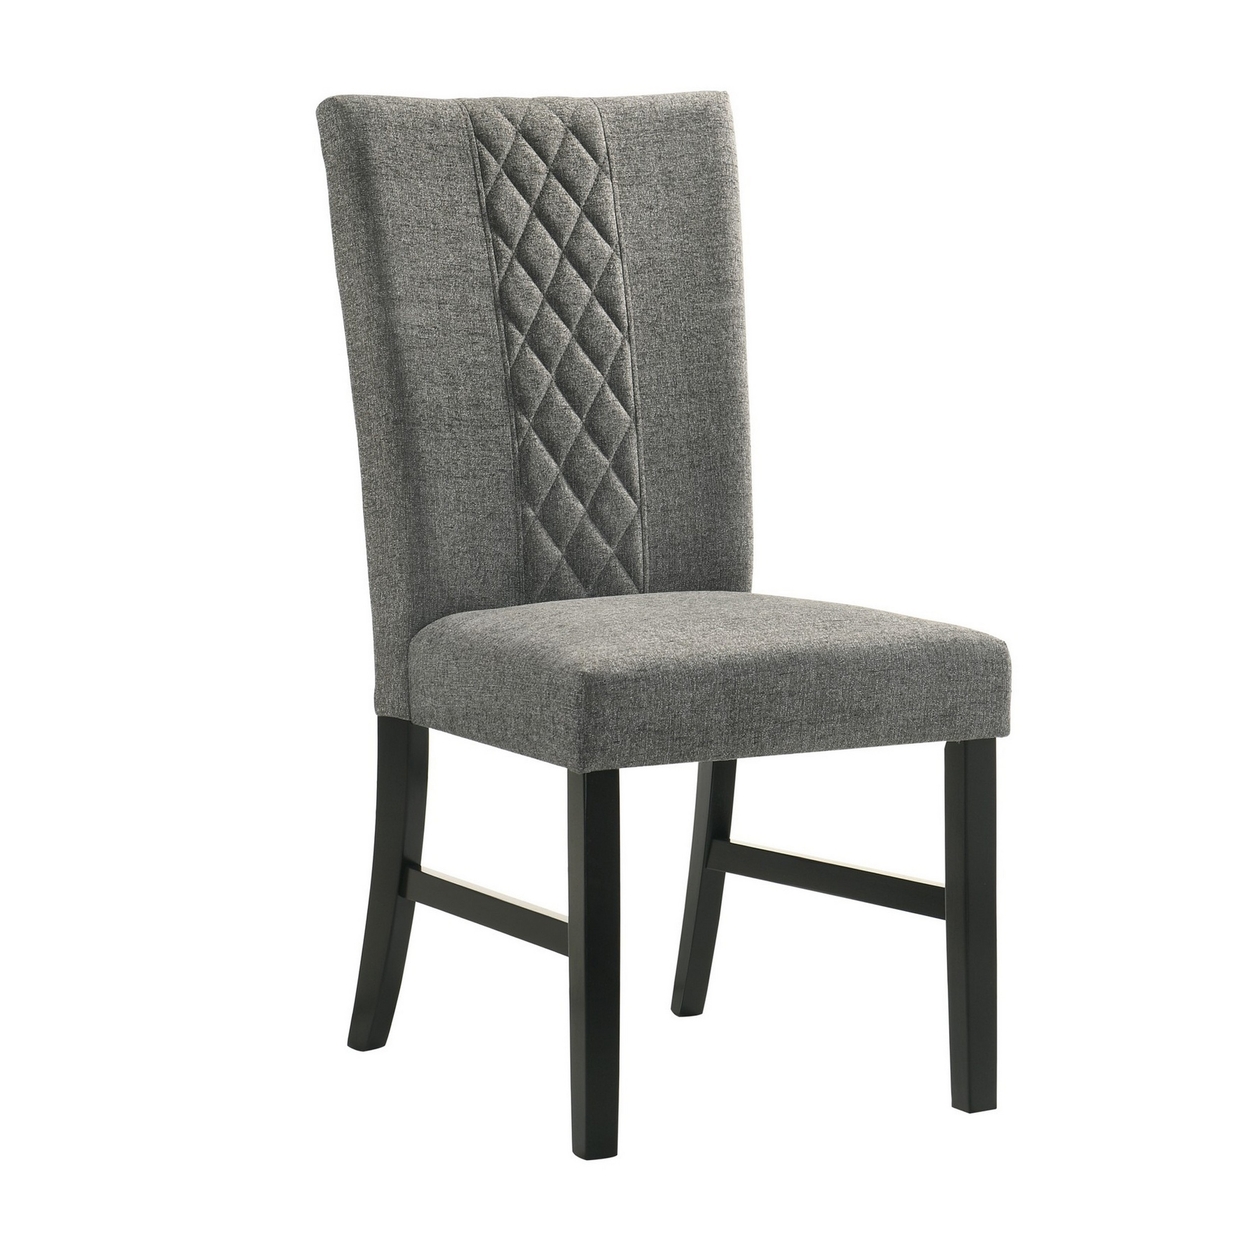 Nicole 26 Inch Side Chair Set Of 2, Wood Frame, Fabric Upholstery, Gray -Saltoro Sherpi